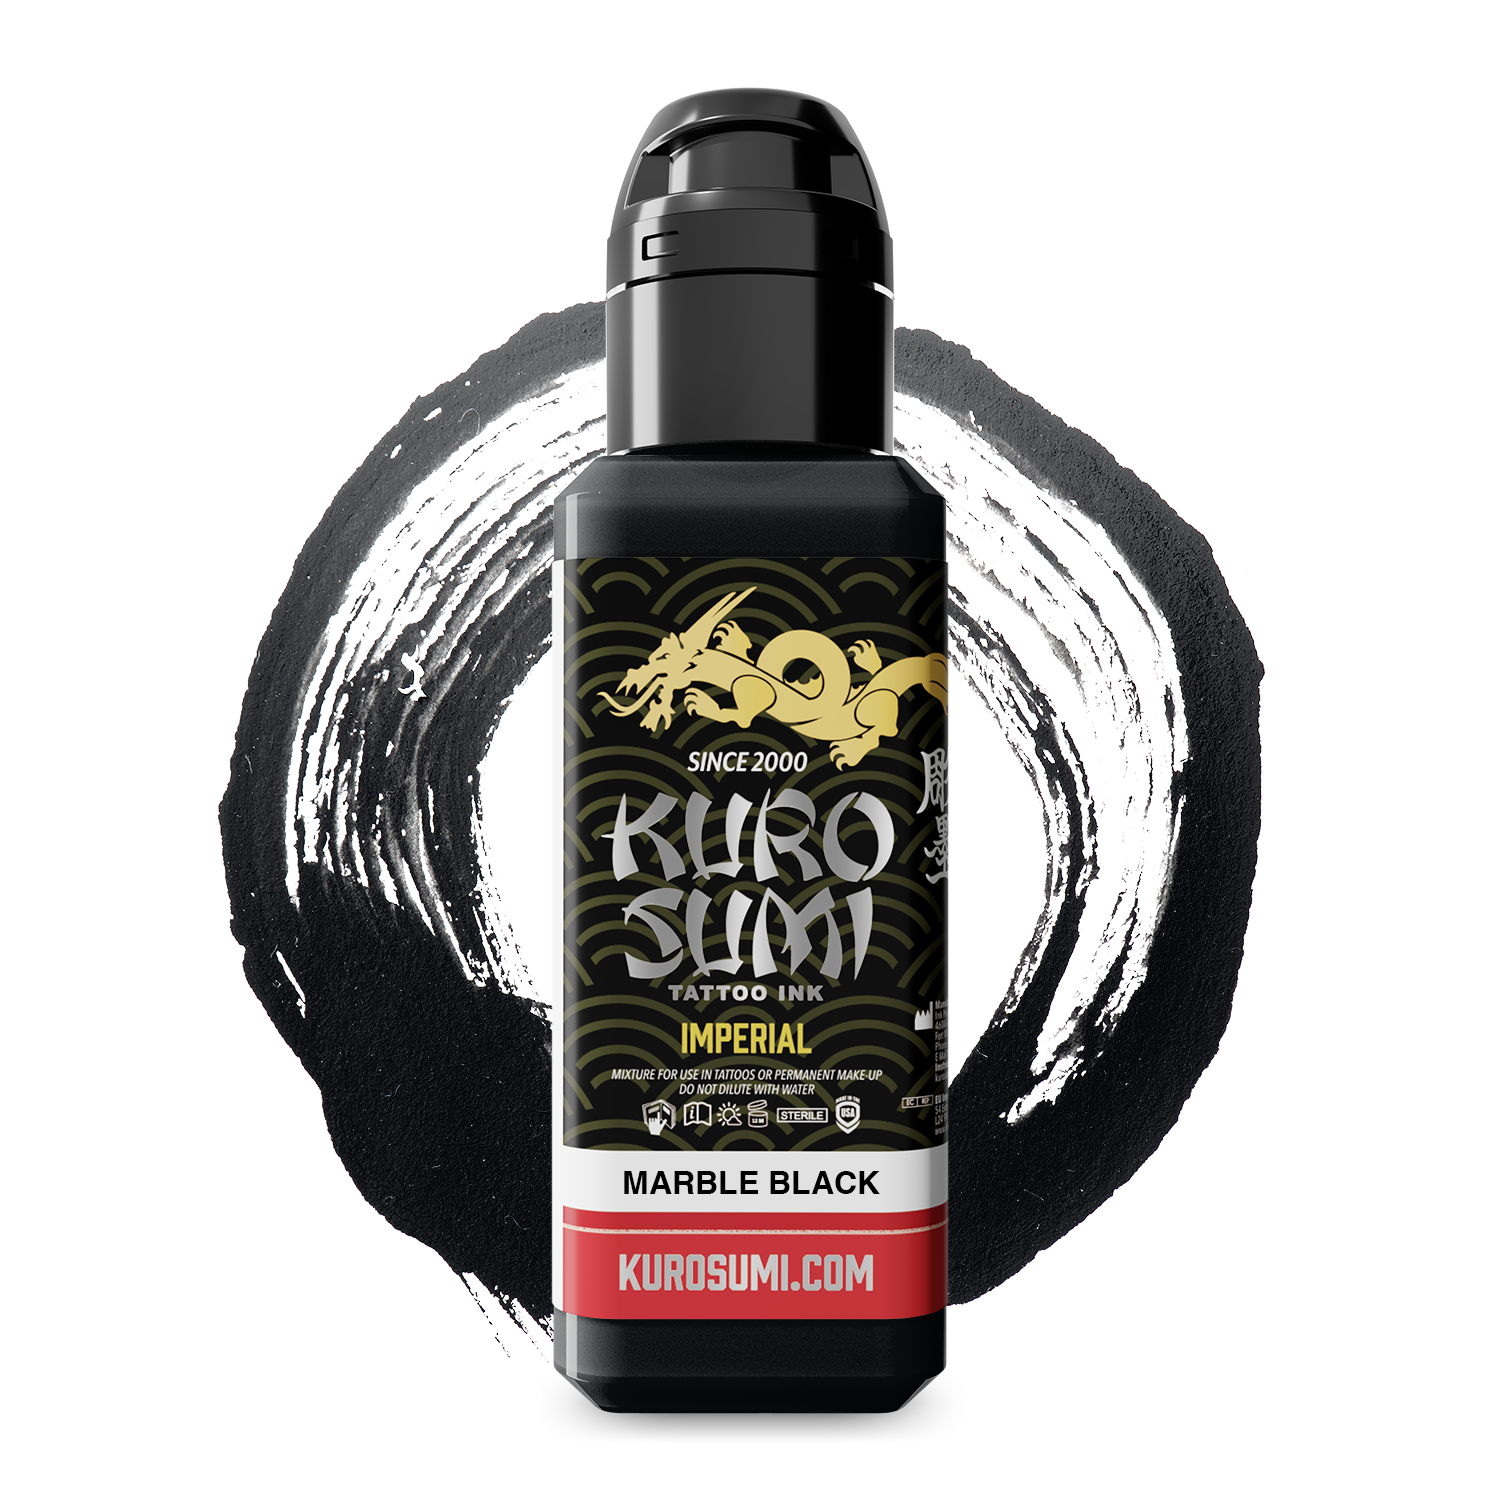 Kuro Sumi - Imperial - Marble Black - 44 ml